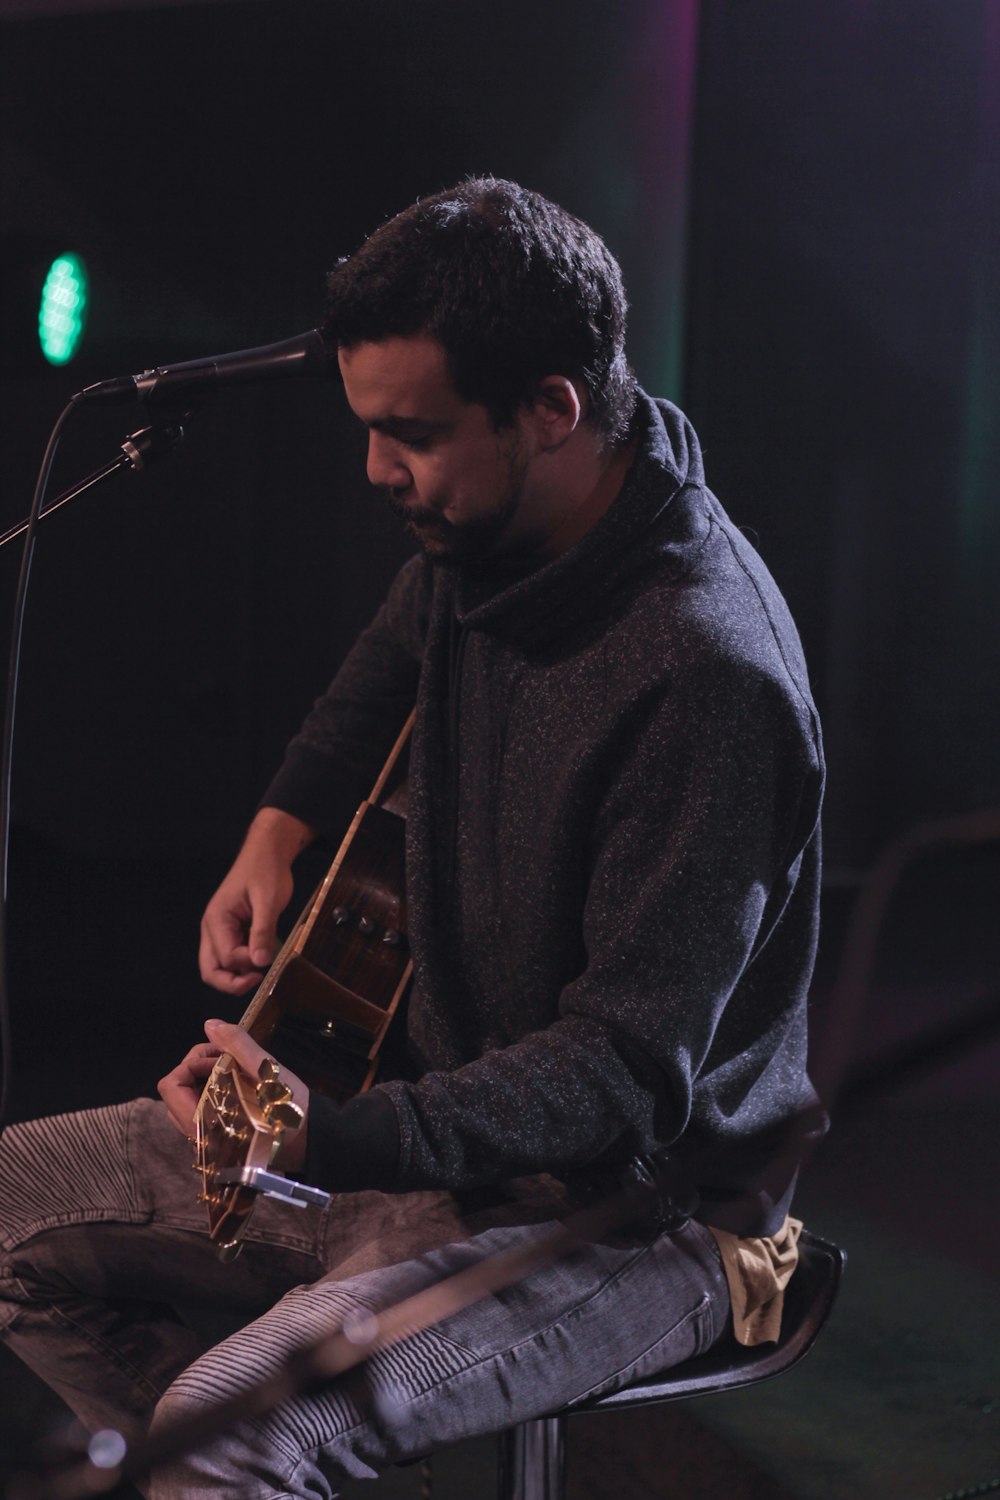 man in gray sweater playing guitar